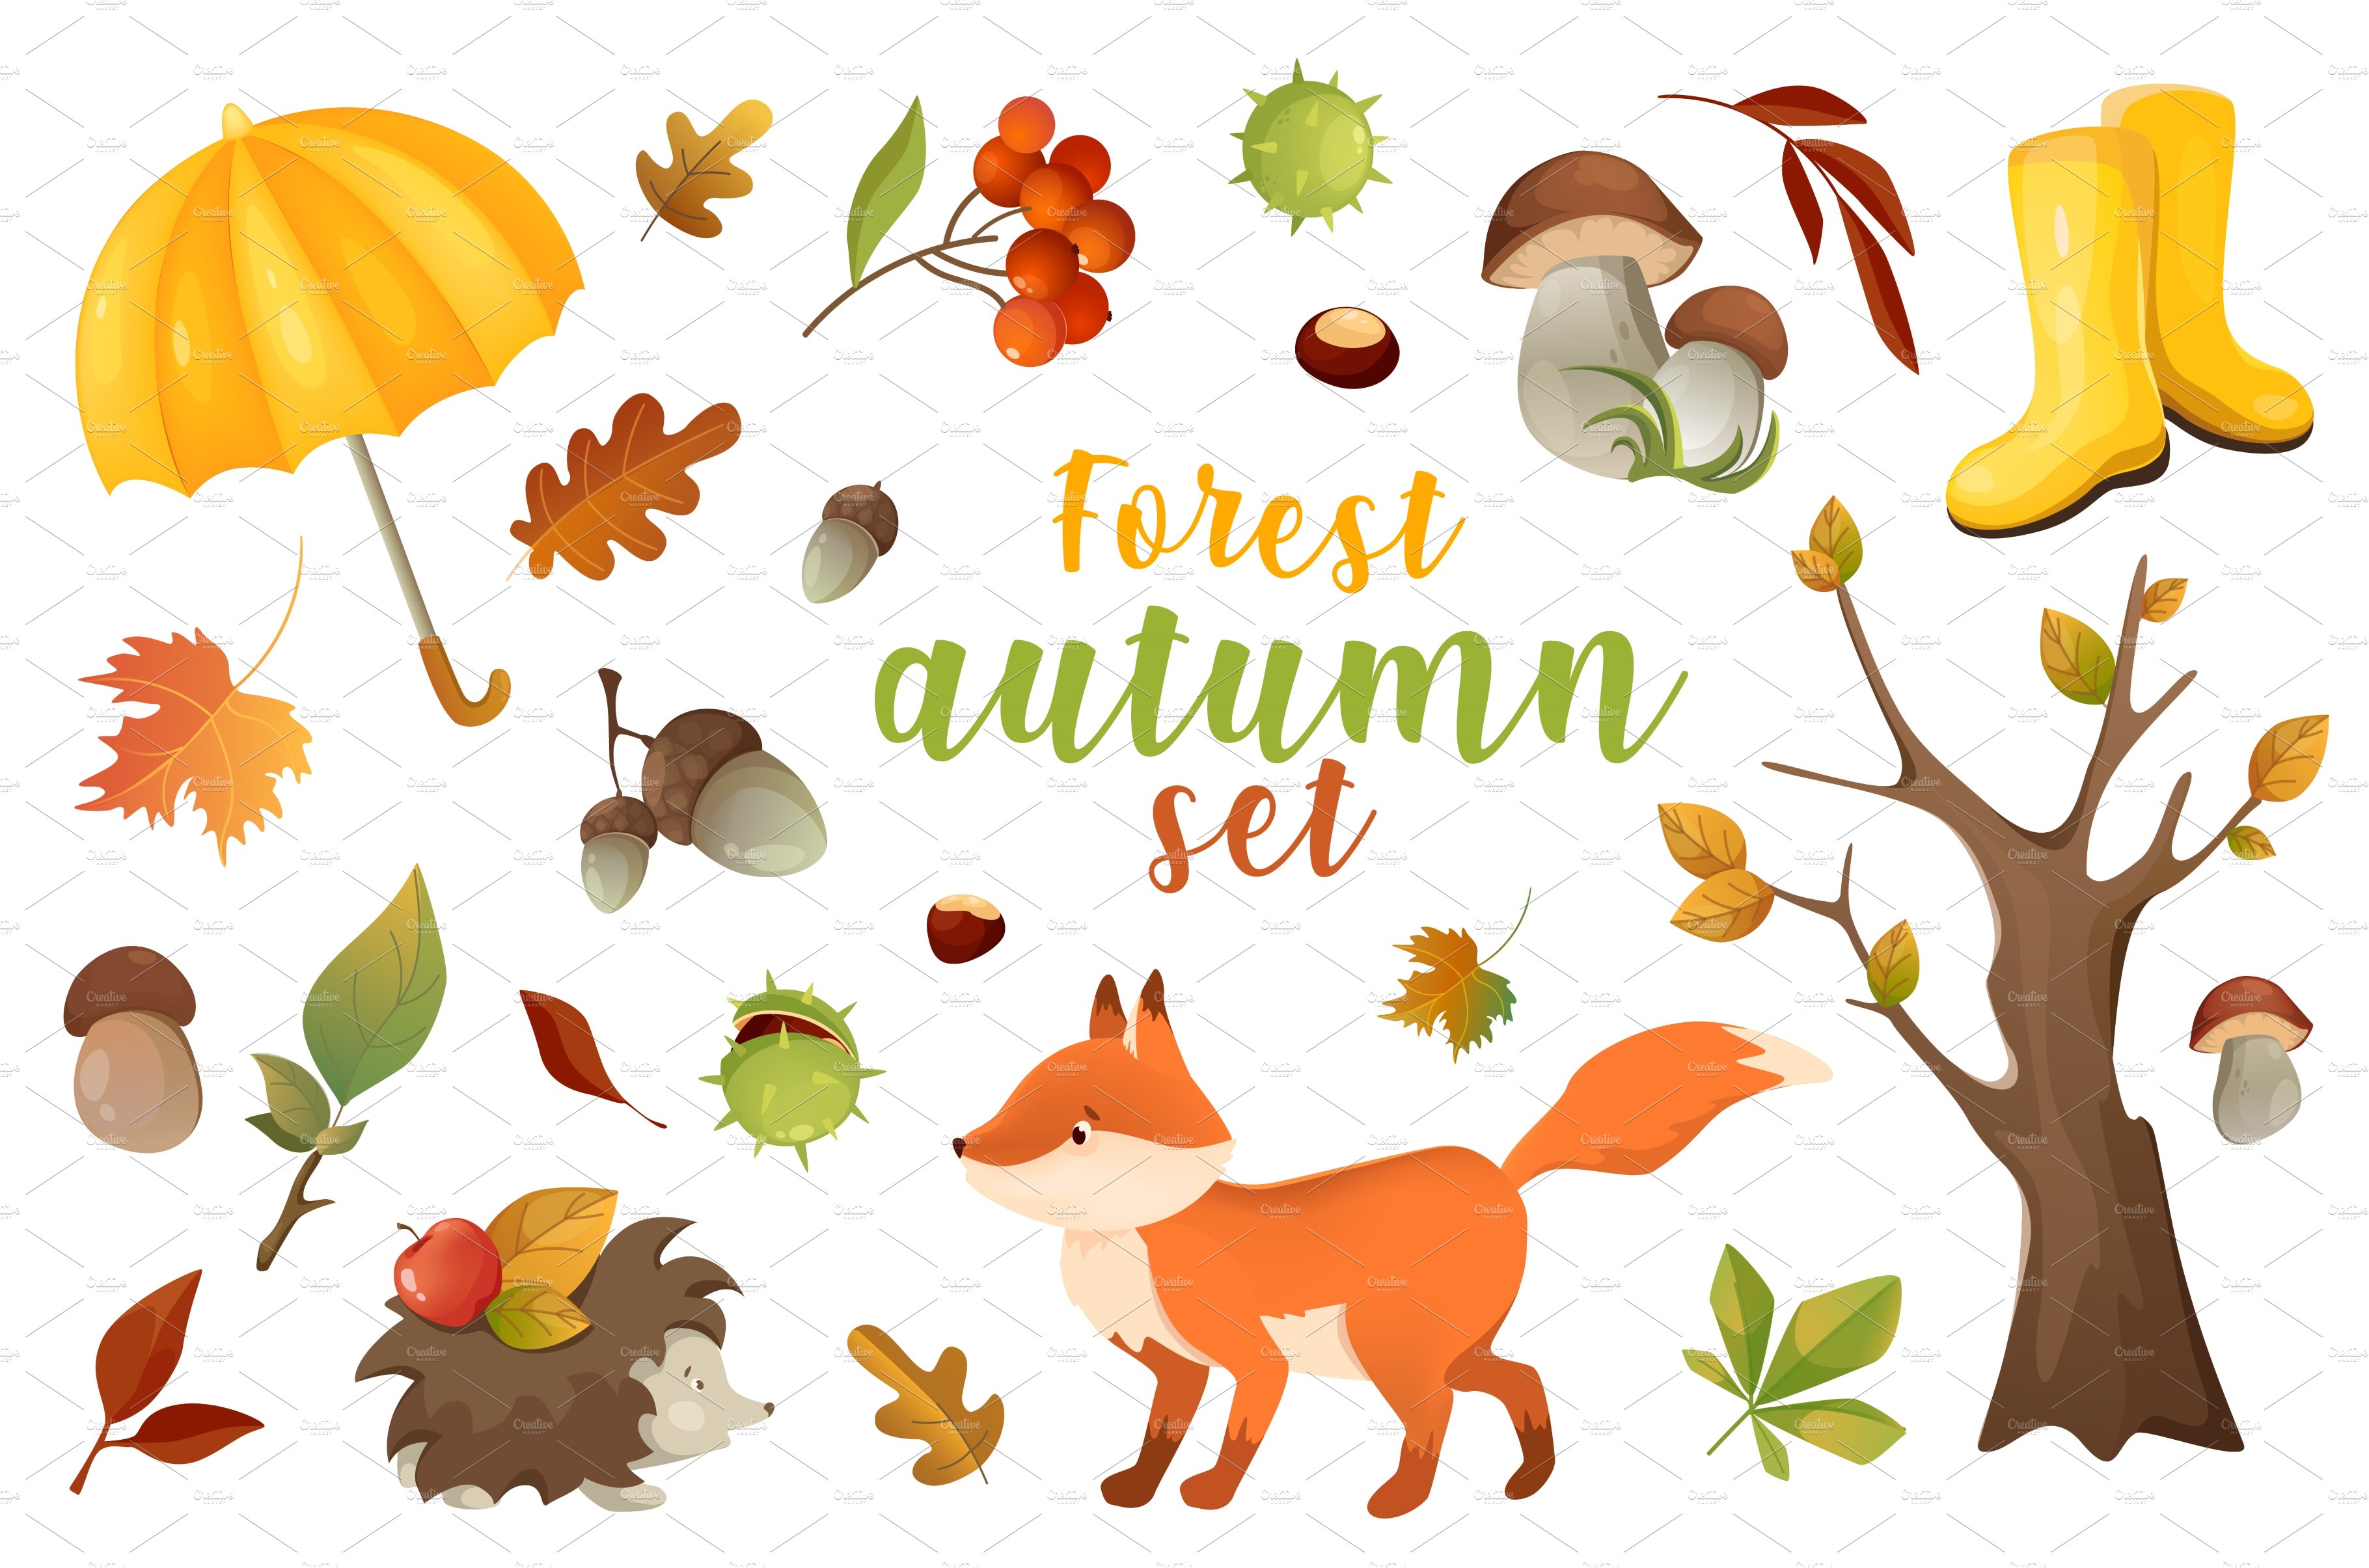 Autumn forest 3d realistic set cover image.